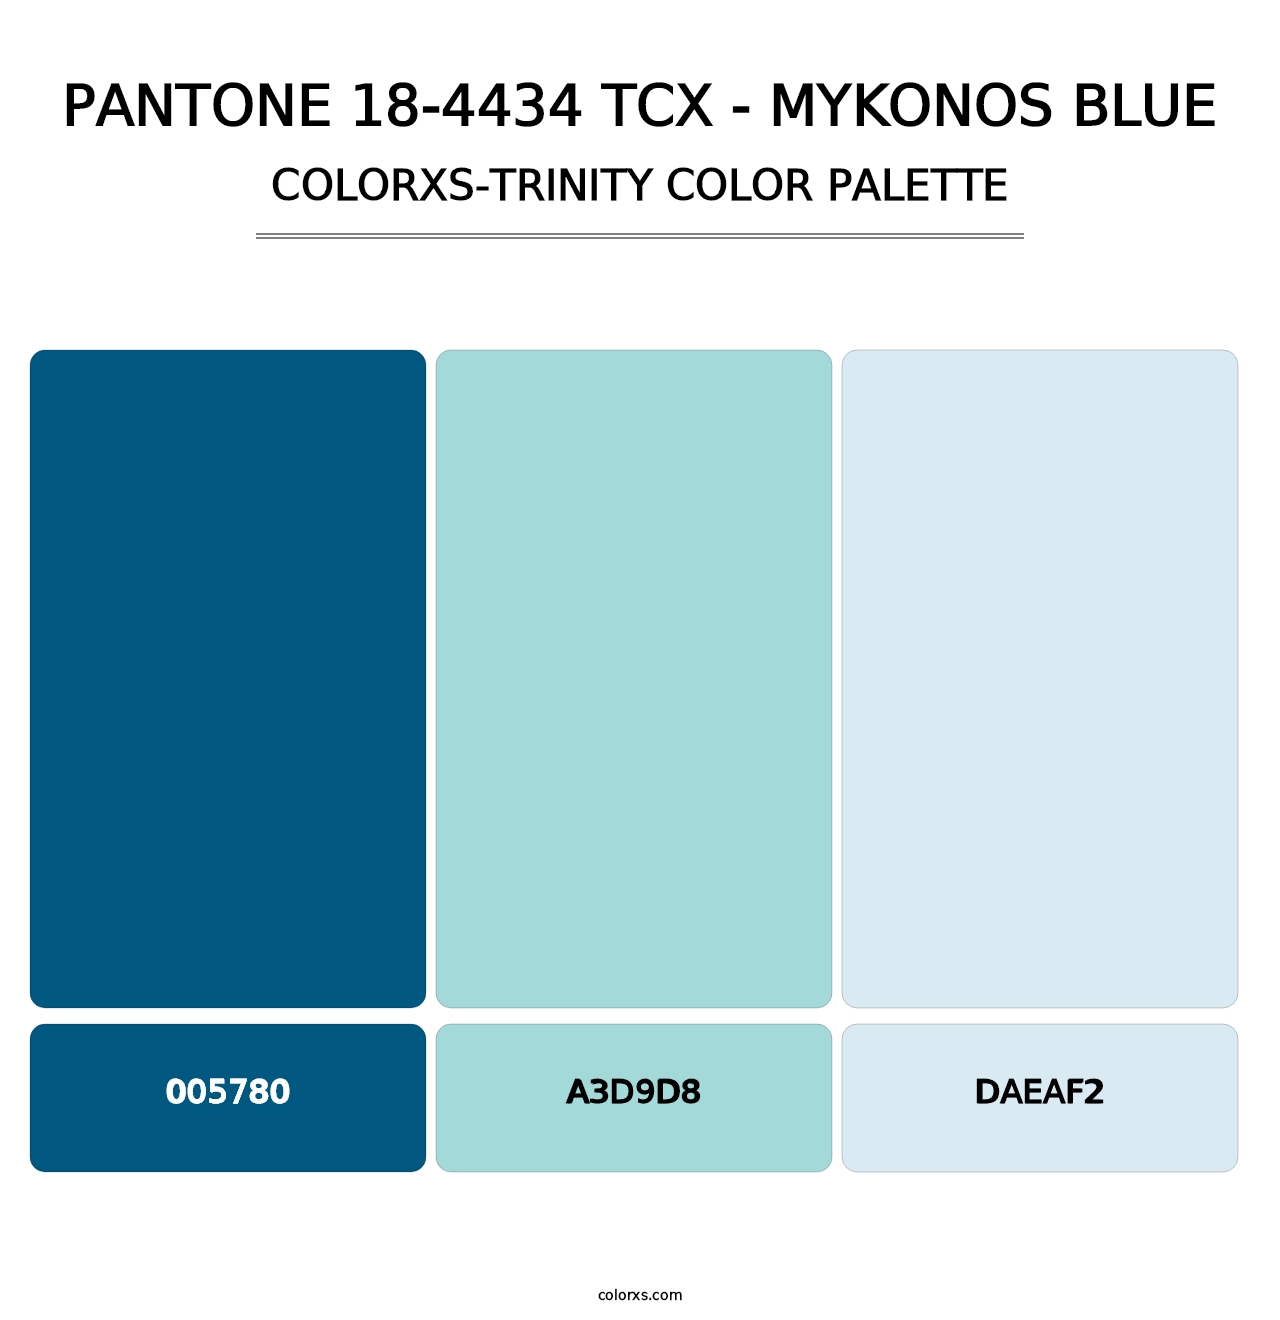 PANTONE 18-4434 TCX - Mykonos Blue - Colorxs Trinity Palette